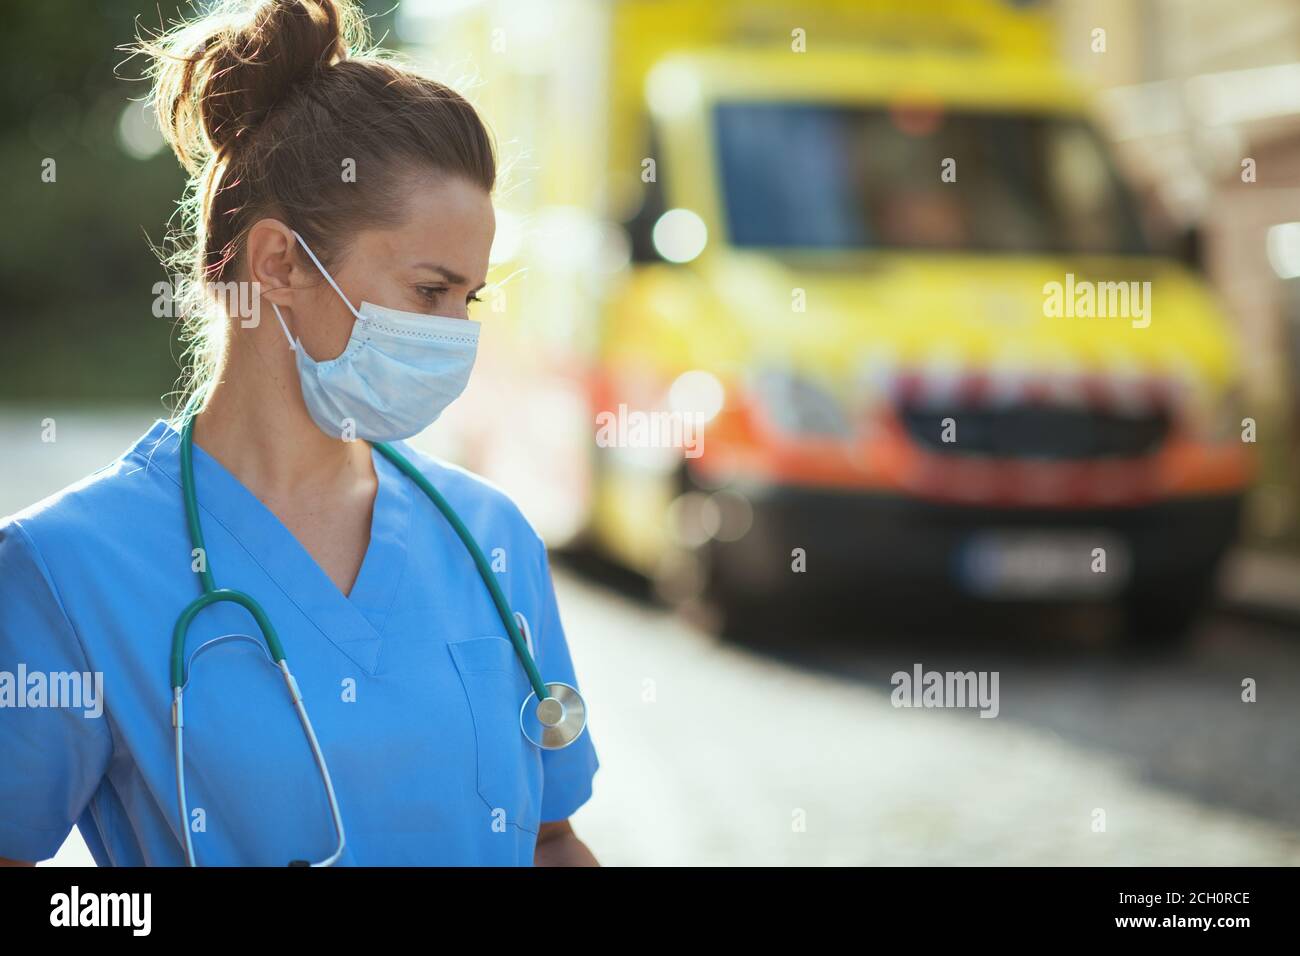 coronavirus pandemic. pensive modern paramedic woman in scrubs with stethoscope and medical mask outside near ambulance. Stock Photo